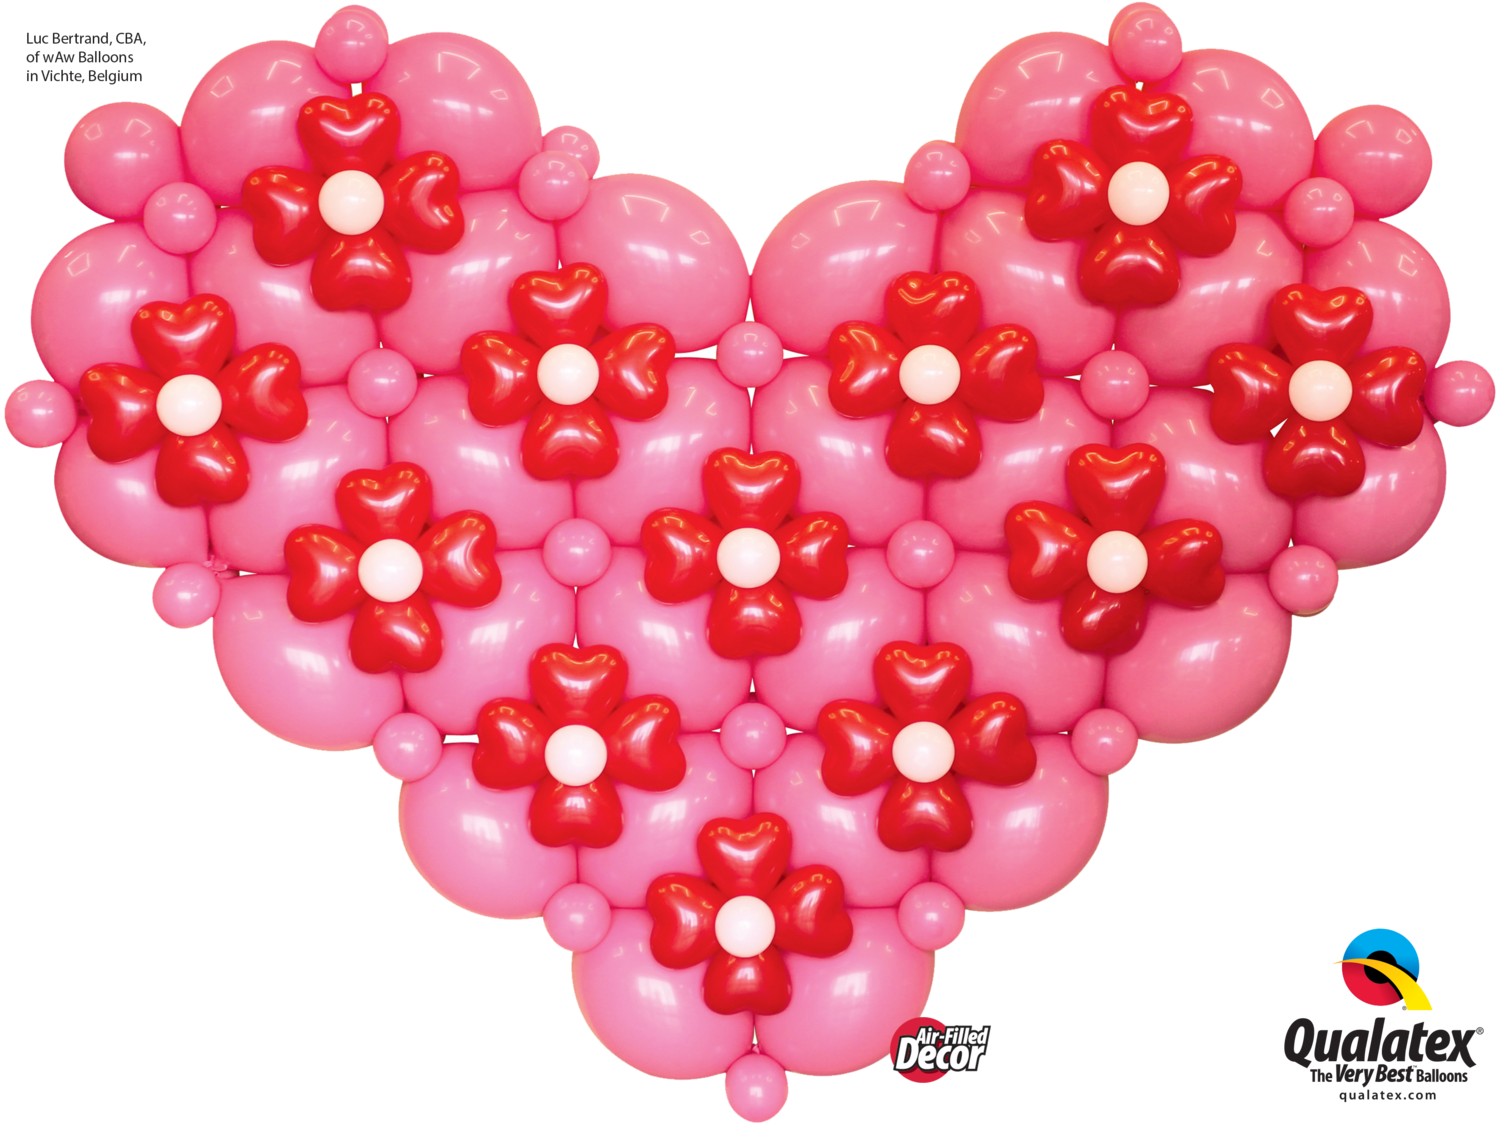 Big heart balloon decoration, embellished